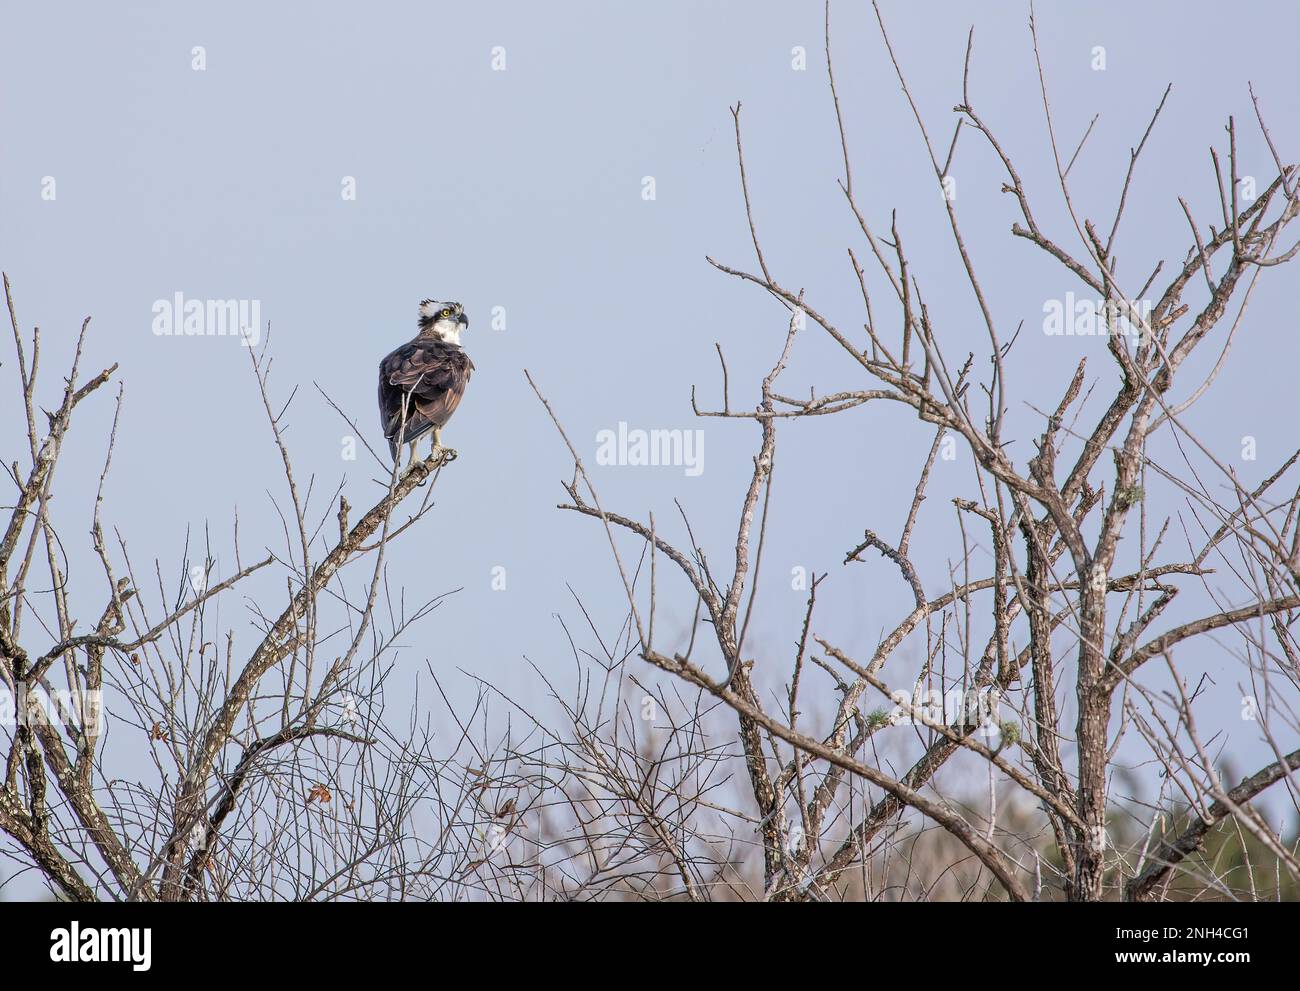 An osprey bird of prey facing forward perched on branches in Florida, USA Stock Photo